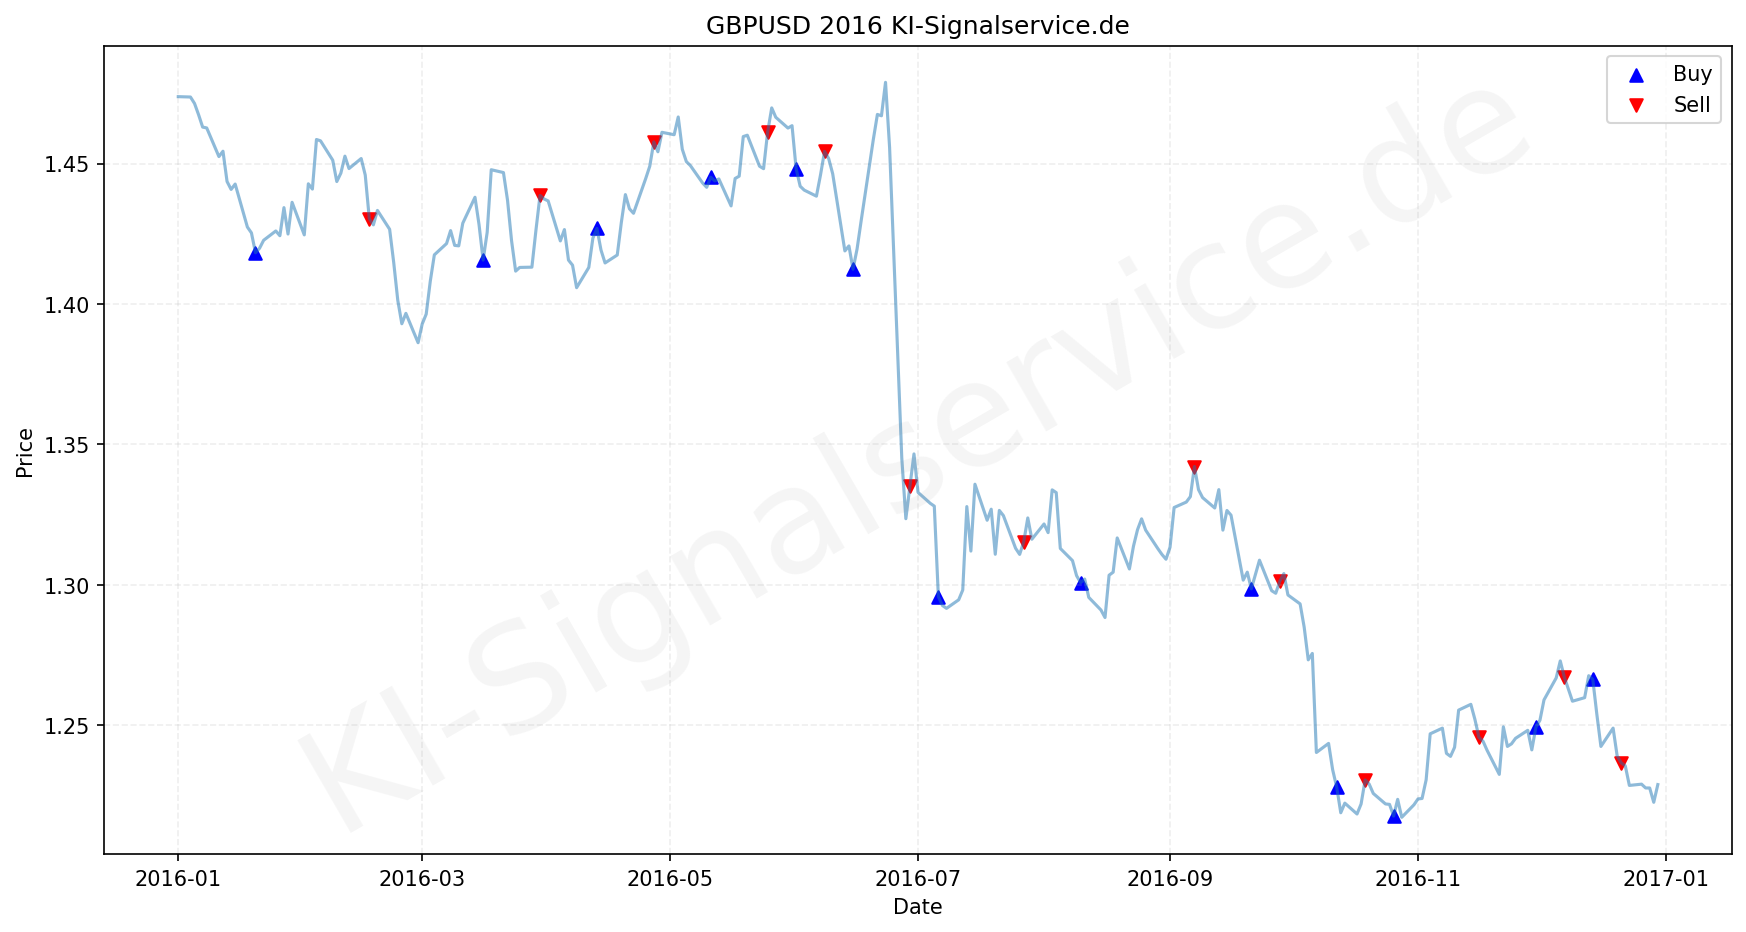 GBPUSD Chart - KI Tradingsignale 2016